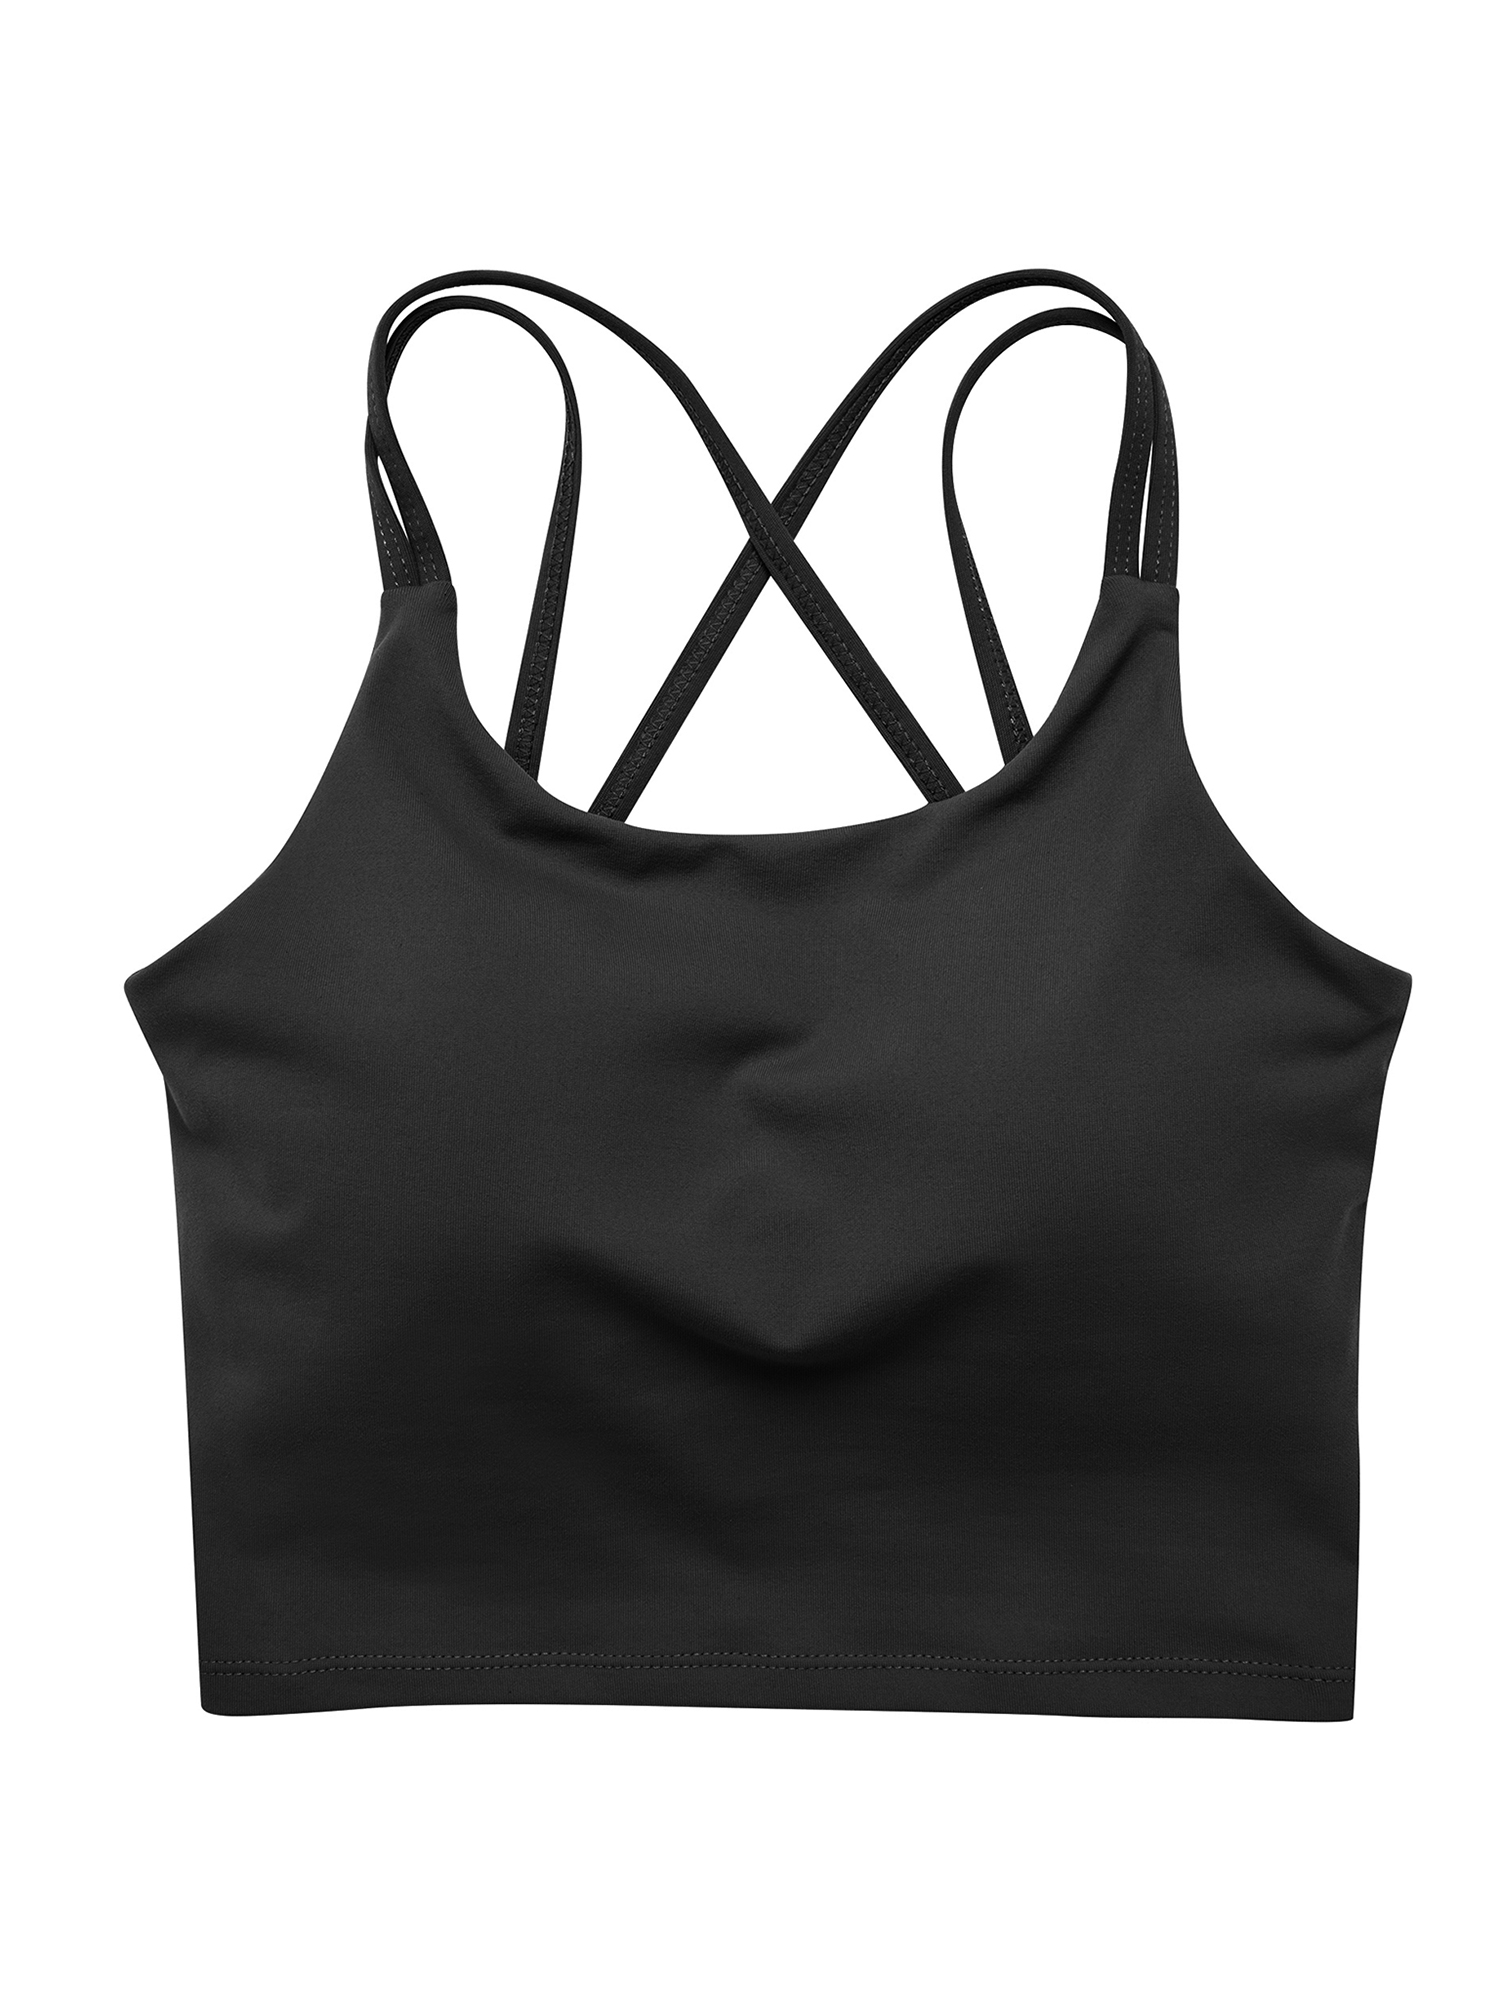 SAYFUT Women Girls Removable Paddeds Sport Bras Spaghetti Strap Yoga Bras for Gym Running Workout Fitness Bra Crop Tops Seamless Stretch Bra - image 5 of 8